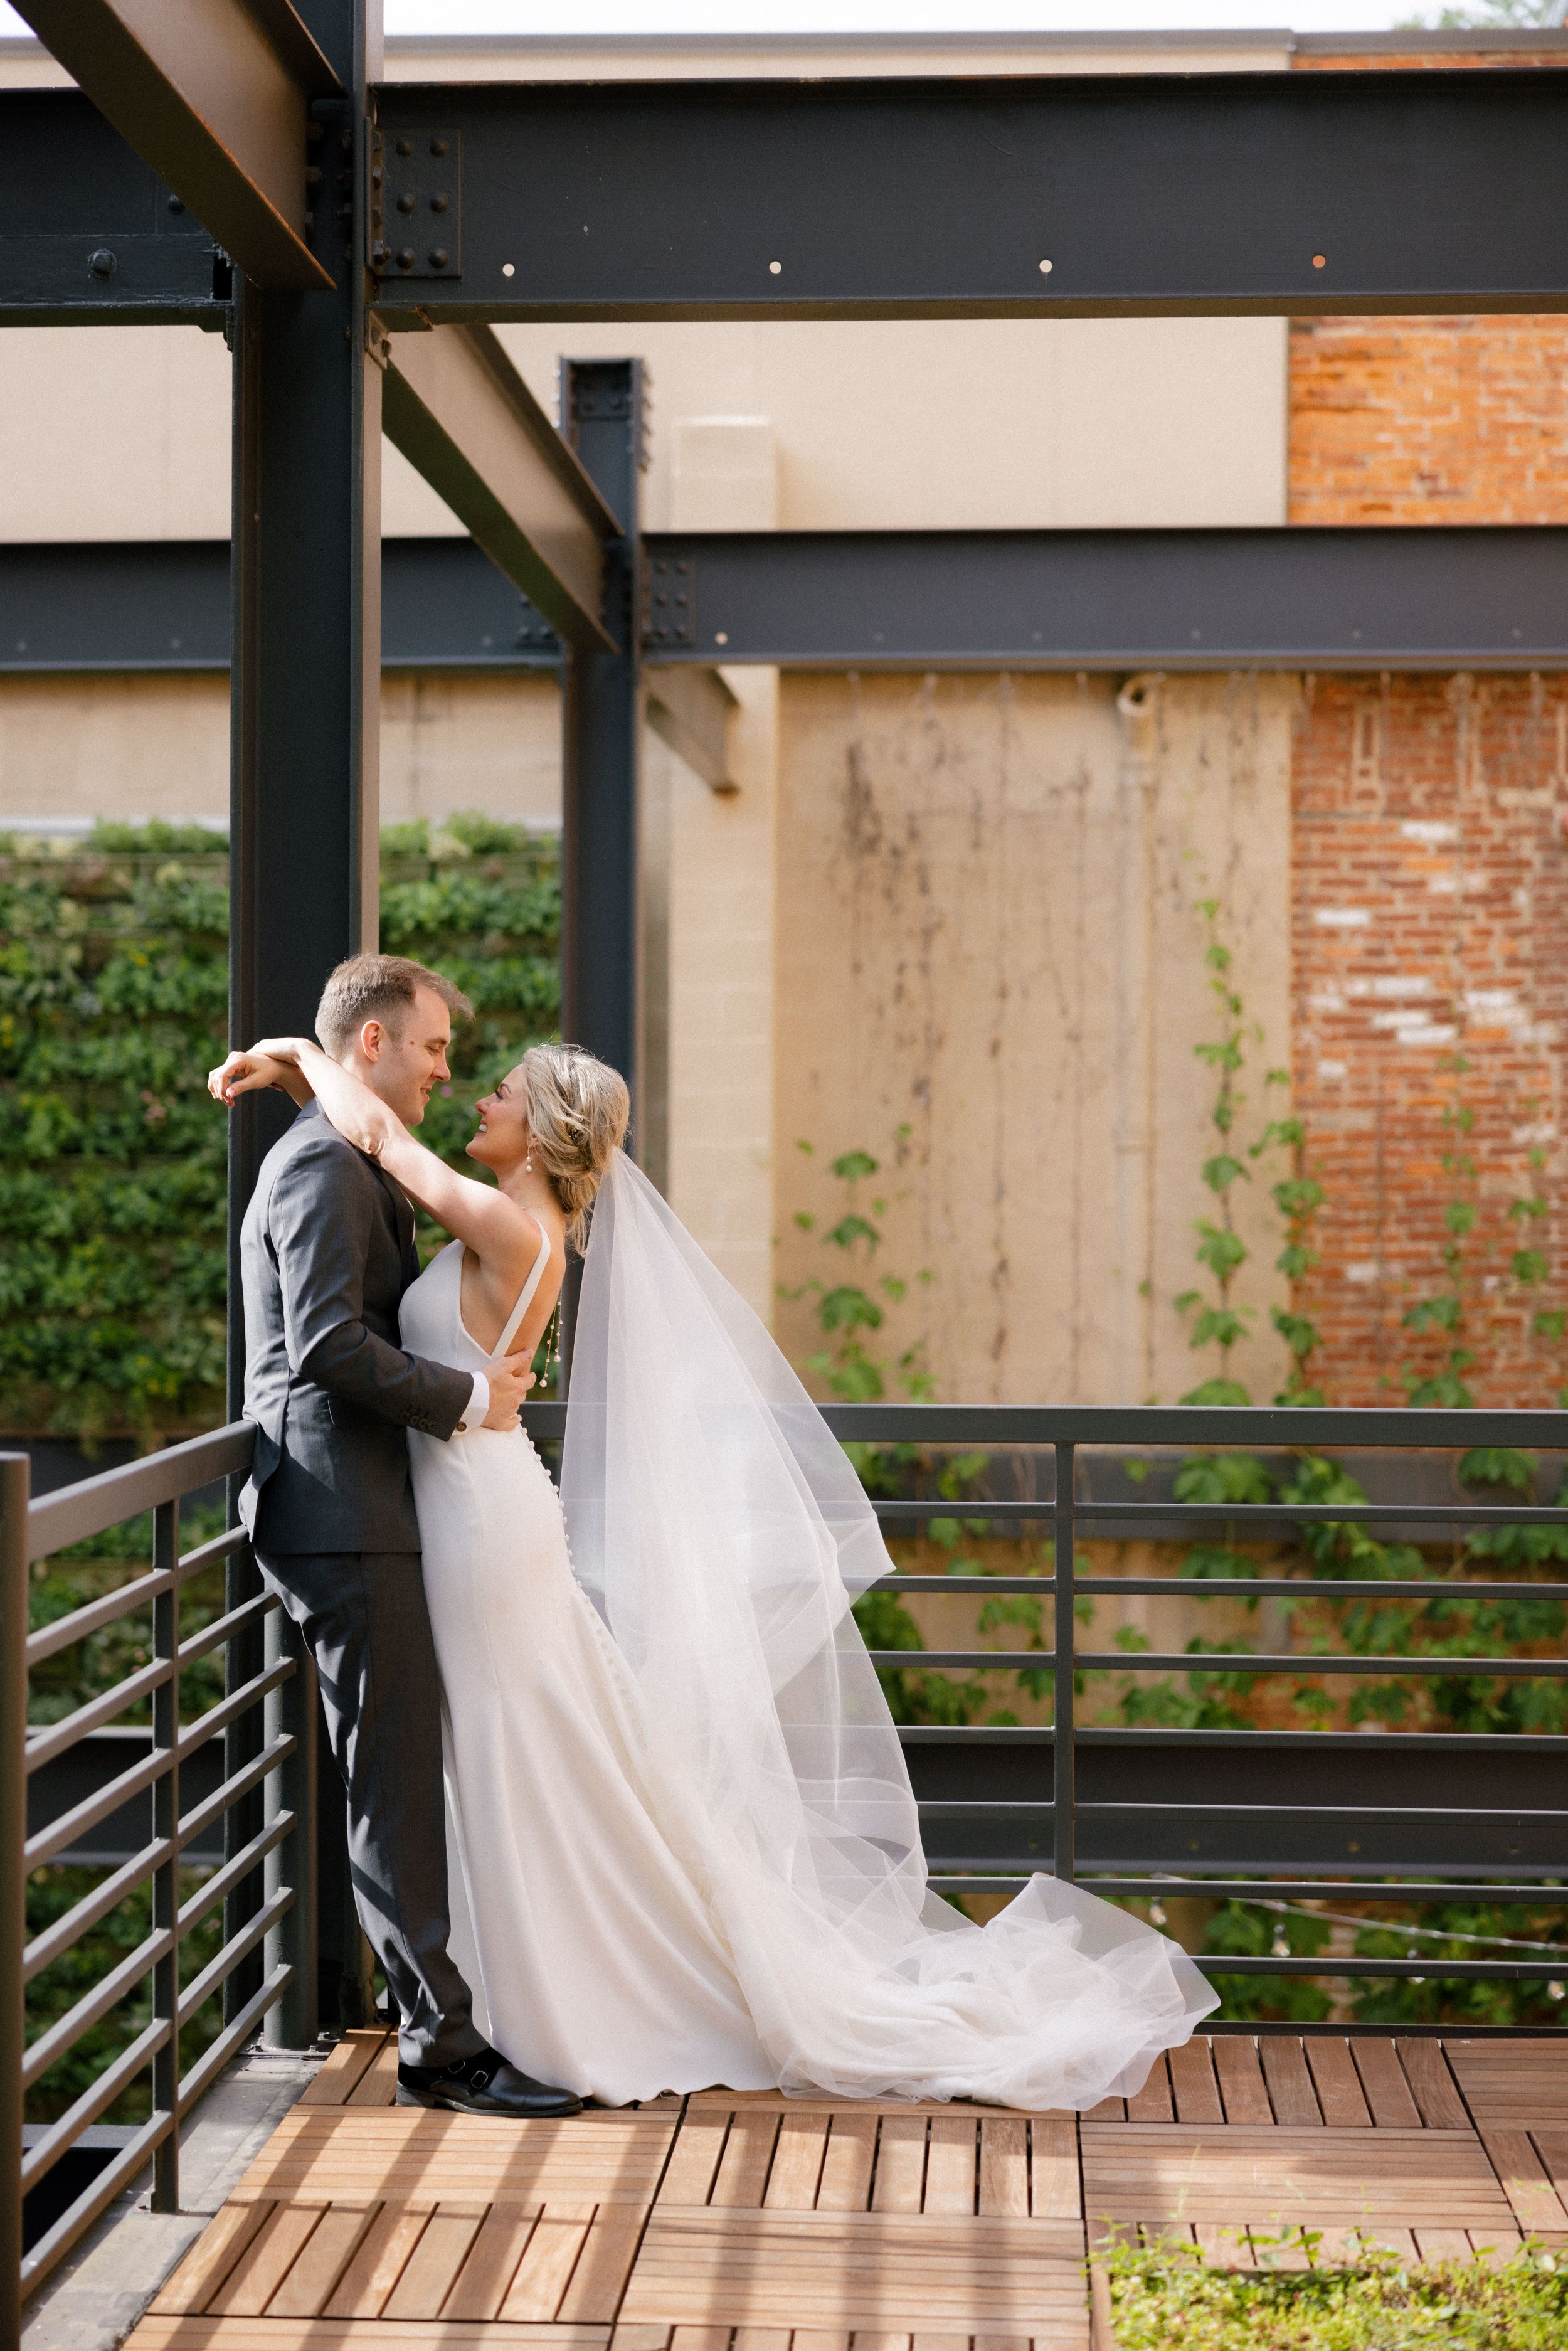 Bride and groom on rooftop deck patio overlooking green wall